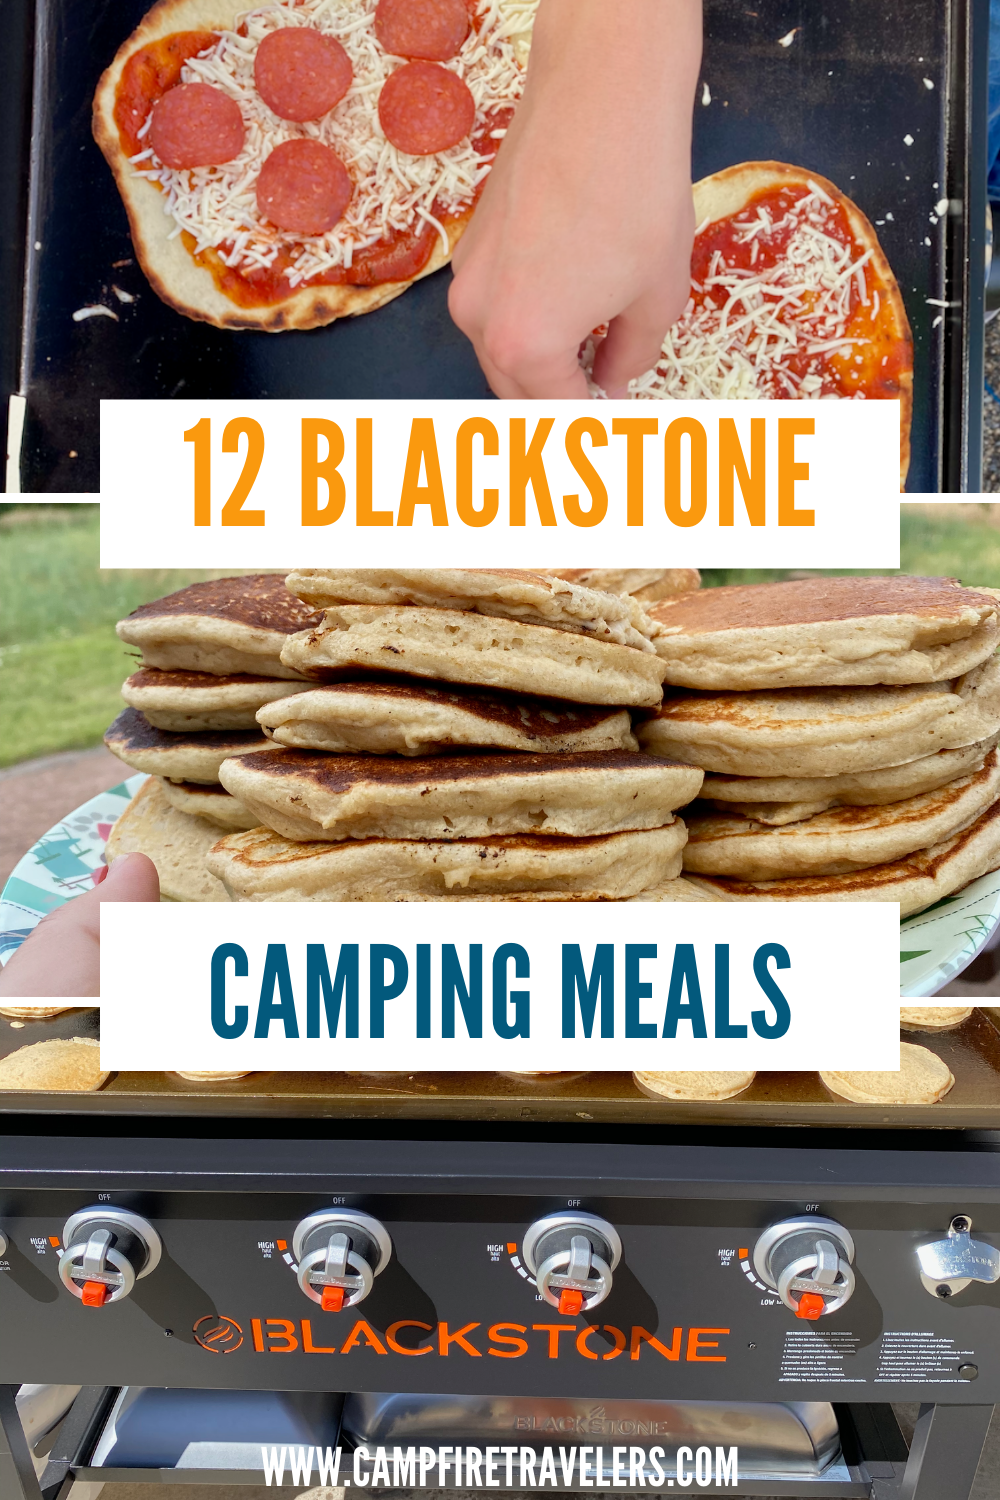 Blackstone Camping Meal Ideas - Weekend RVing menu for griddles ...